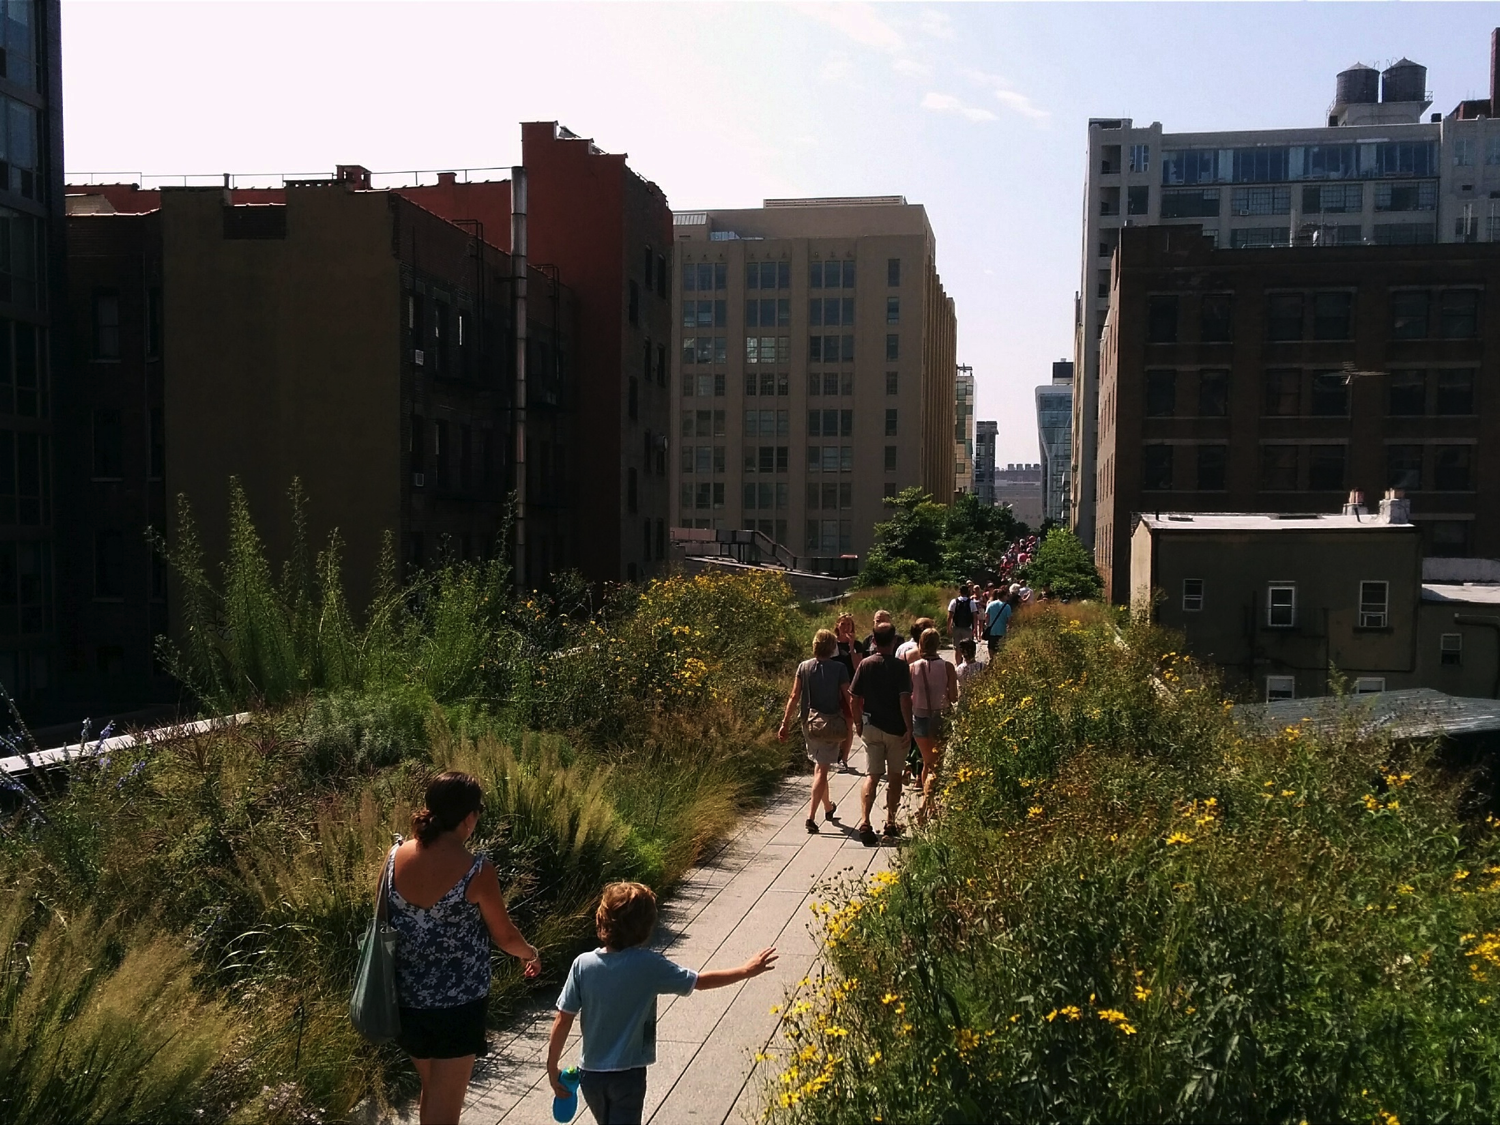 The High Line, New York City by Mark Skarratts via Flickr (CC BY 2.0)